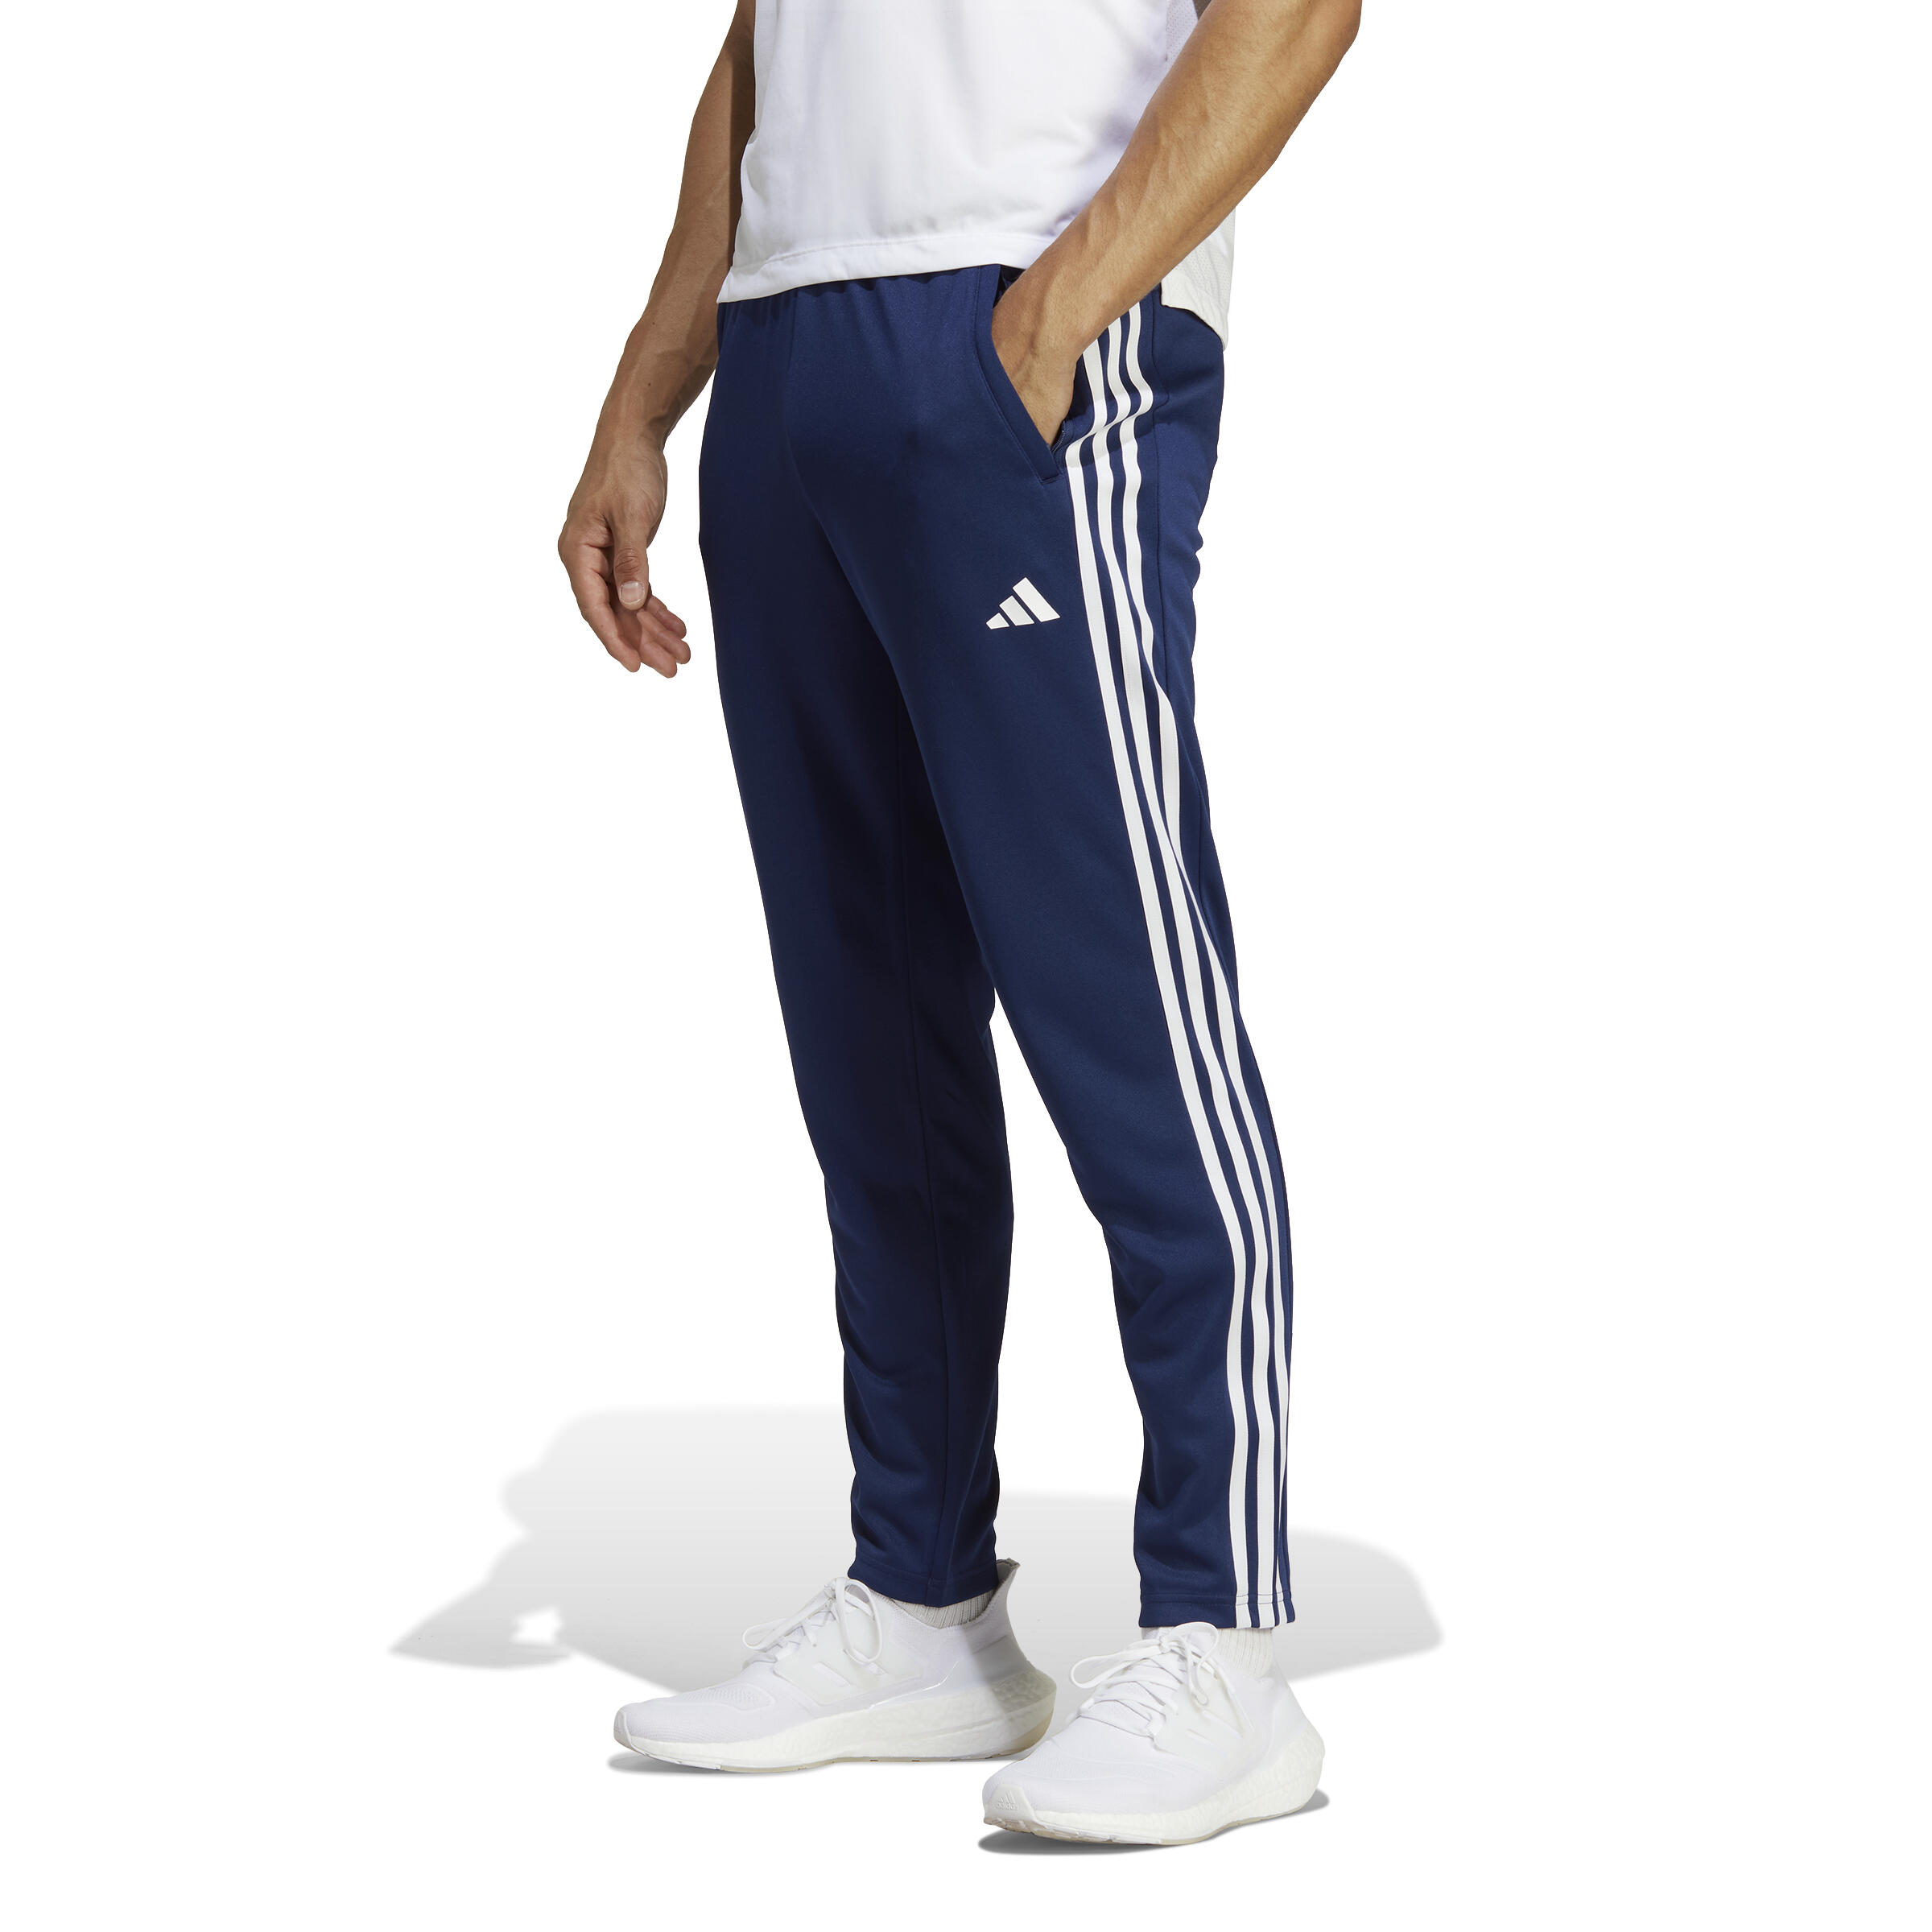 Adidas Men's Cardio Fitness Jogging Bottoms - Blue